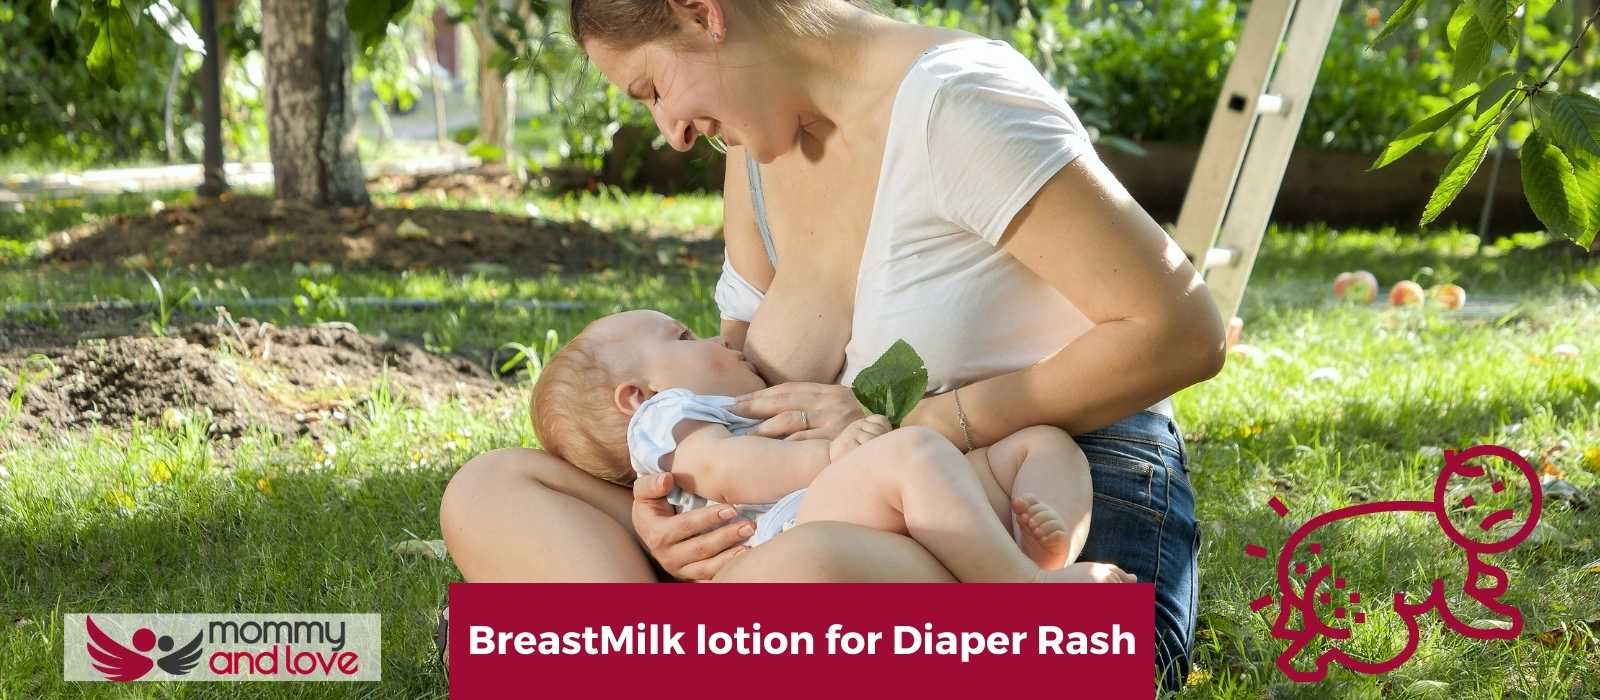 BreastMilk lotion for Diaper Rash